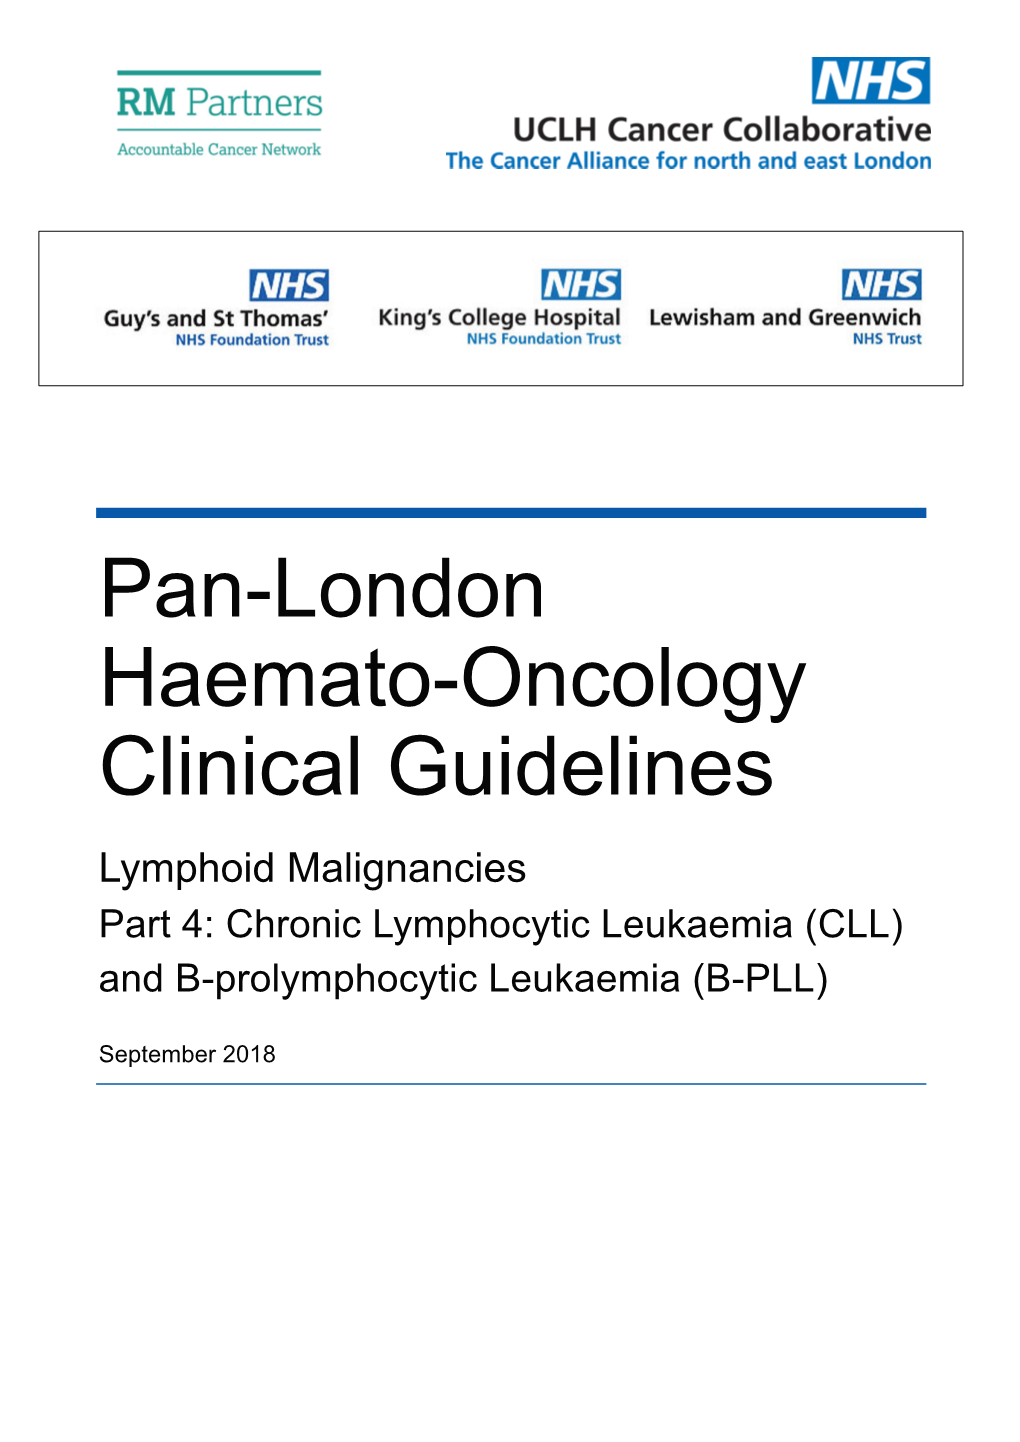 Part 4: Chronic Lymphocytic Leukaemia (CLL) and B-Prolymphocytic Leukaemia (B-PLL)